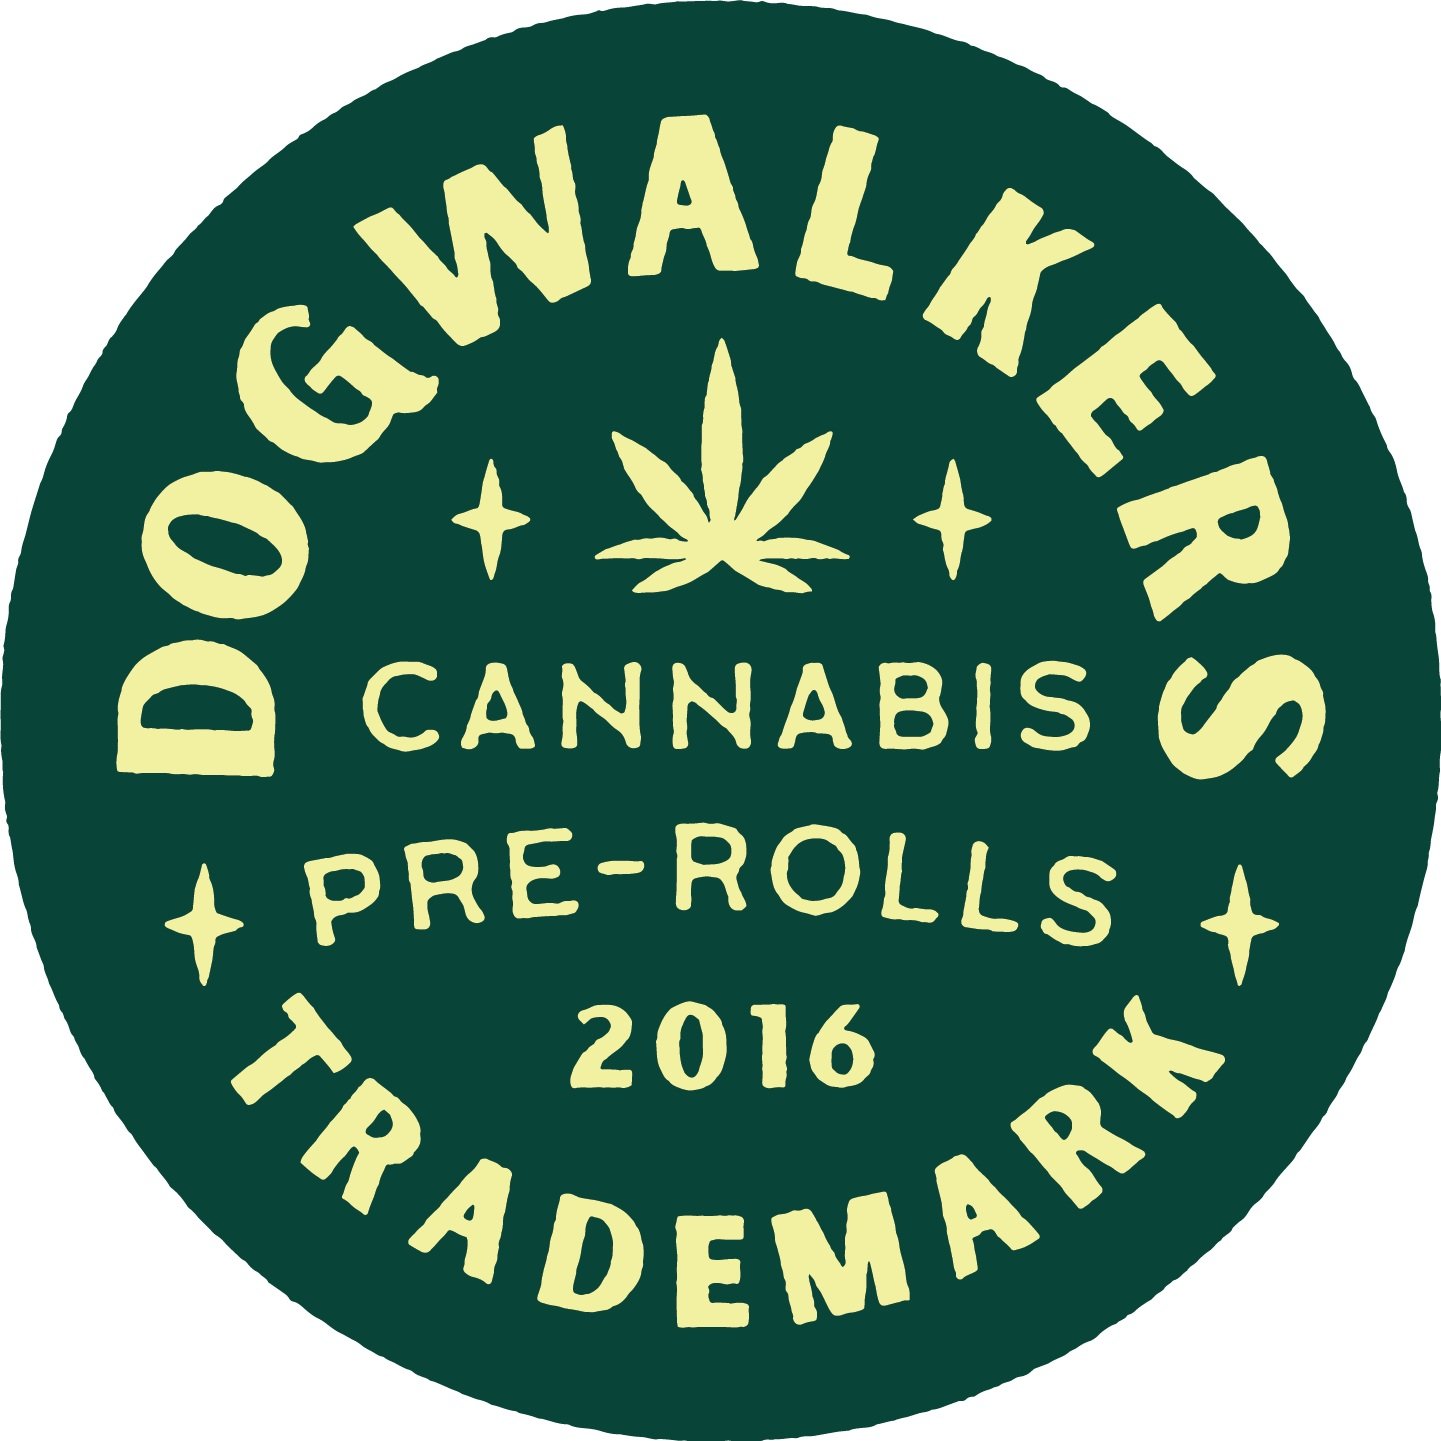 Dogwalkers-CirclePatch-Logo-GreenYellow.jpg